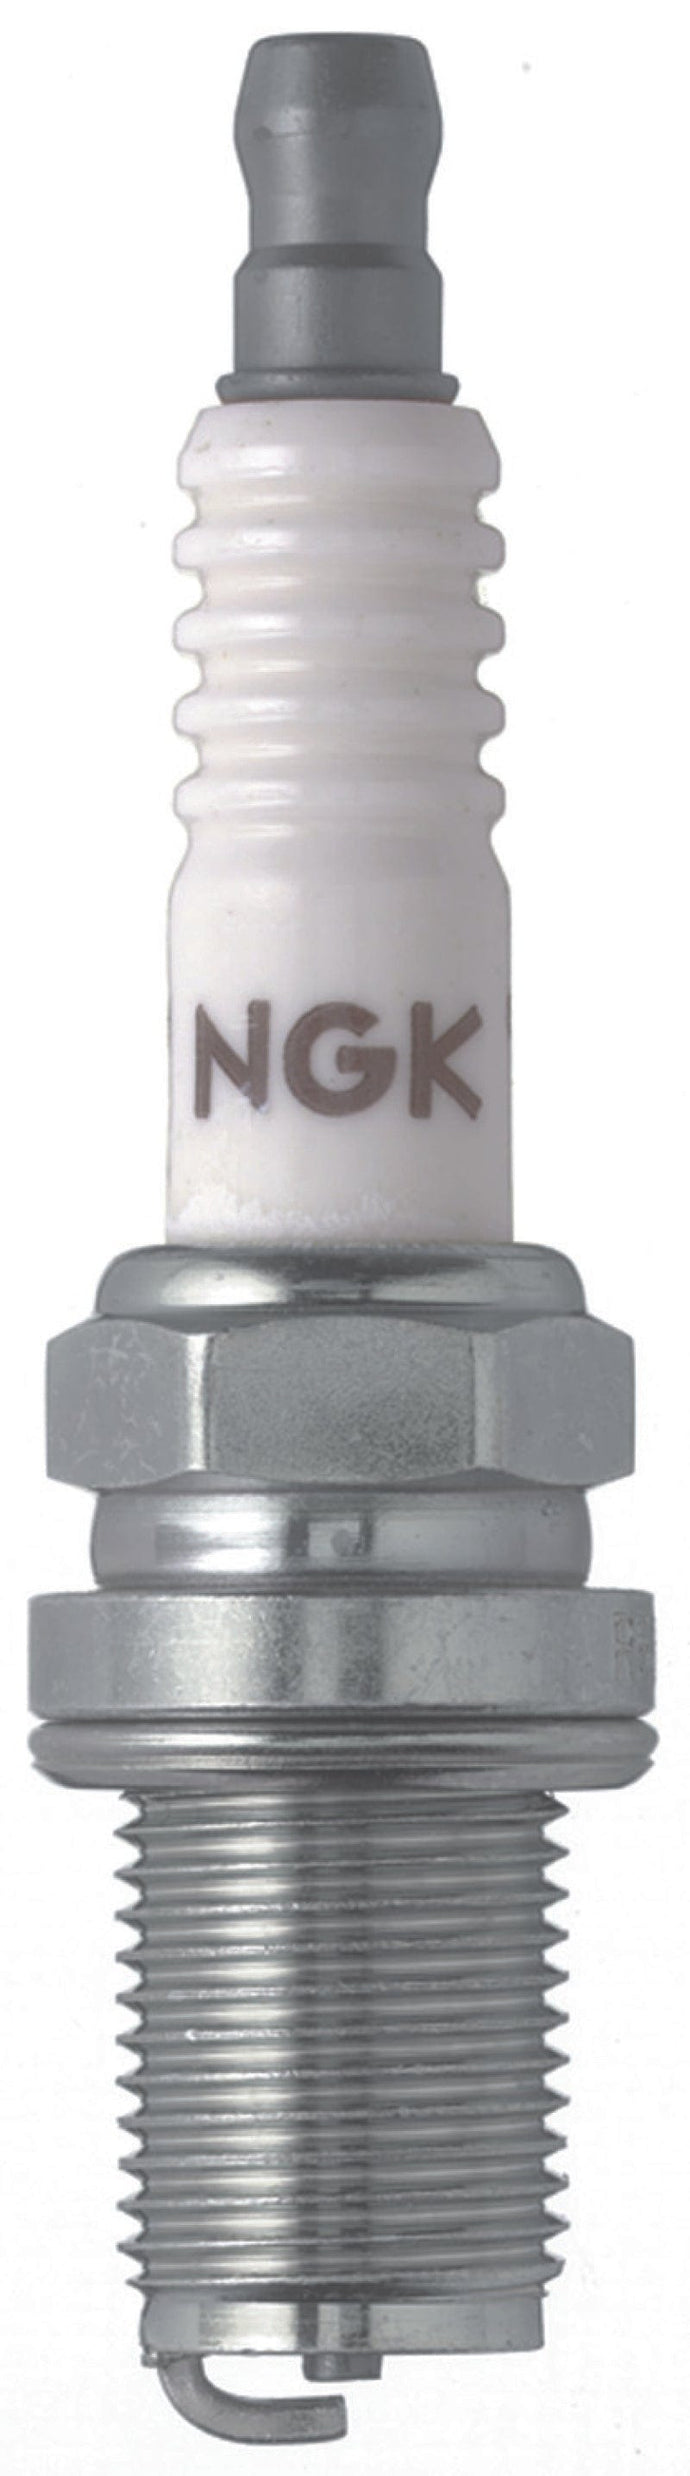 NGK NGK4017